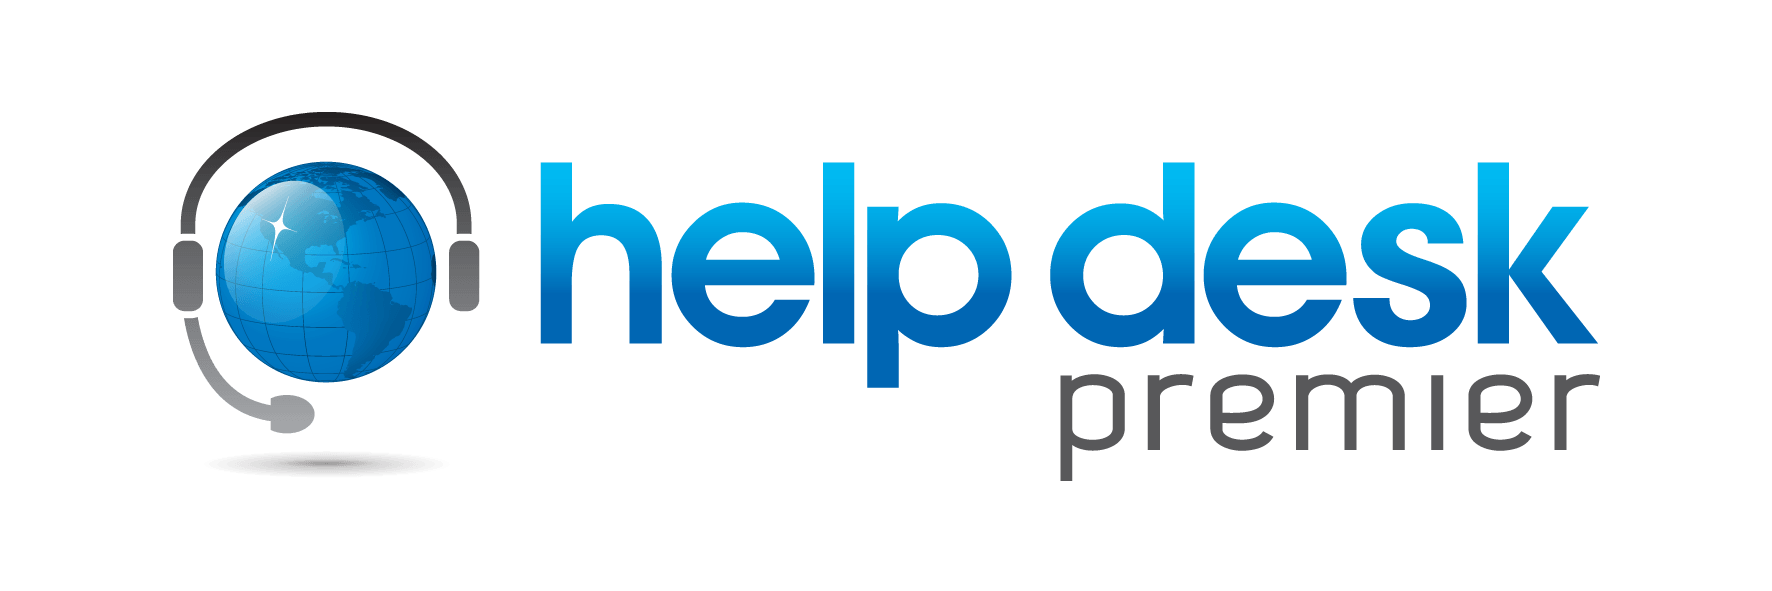 Help Desk Logo - LogoDix